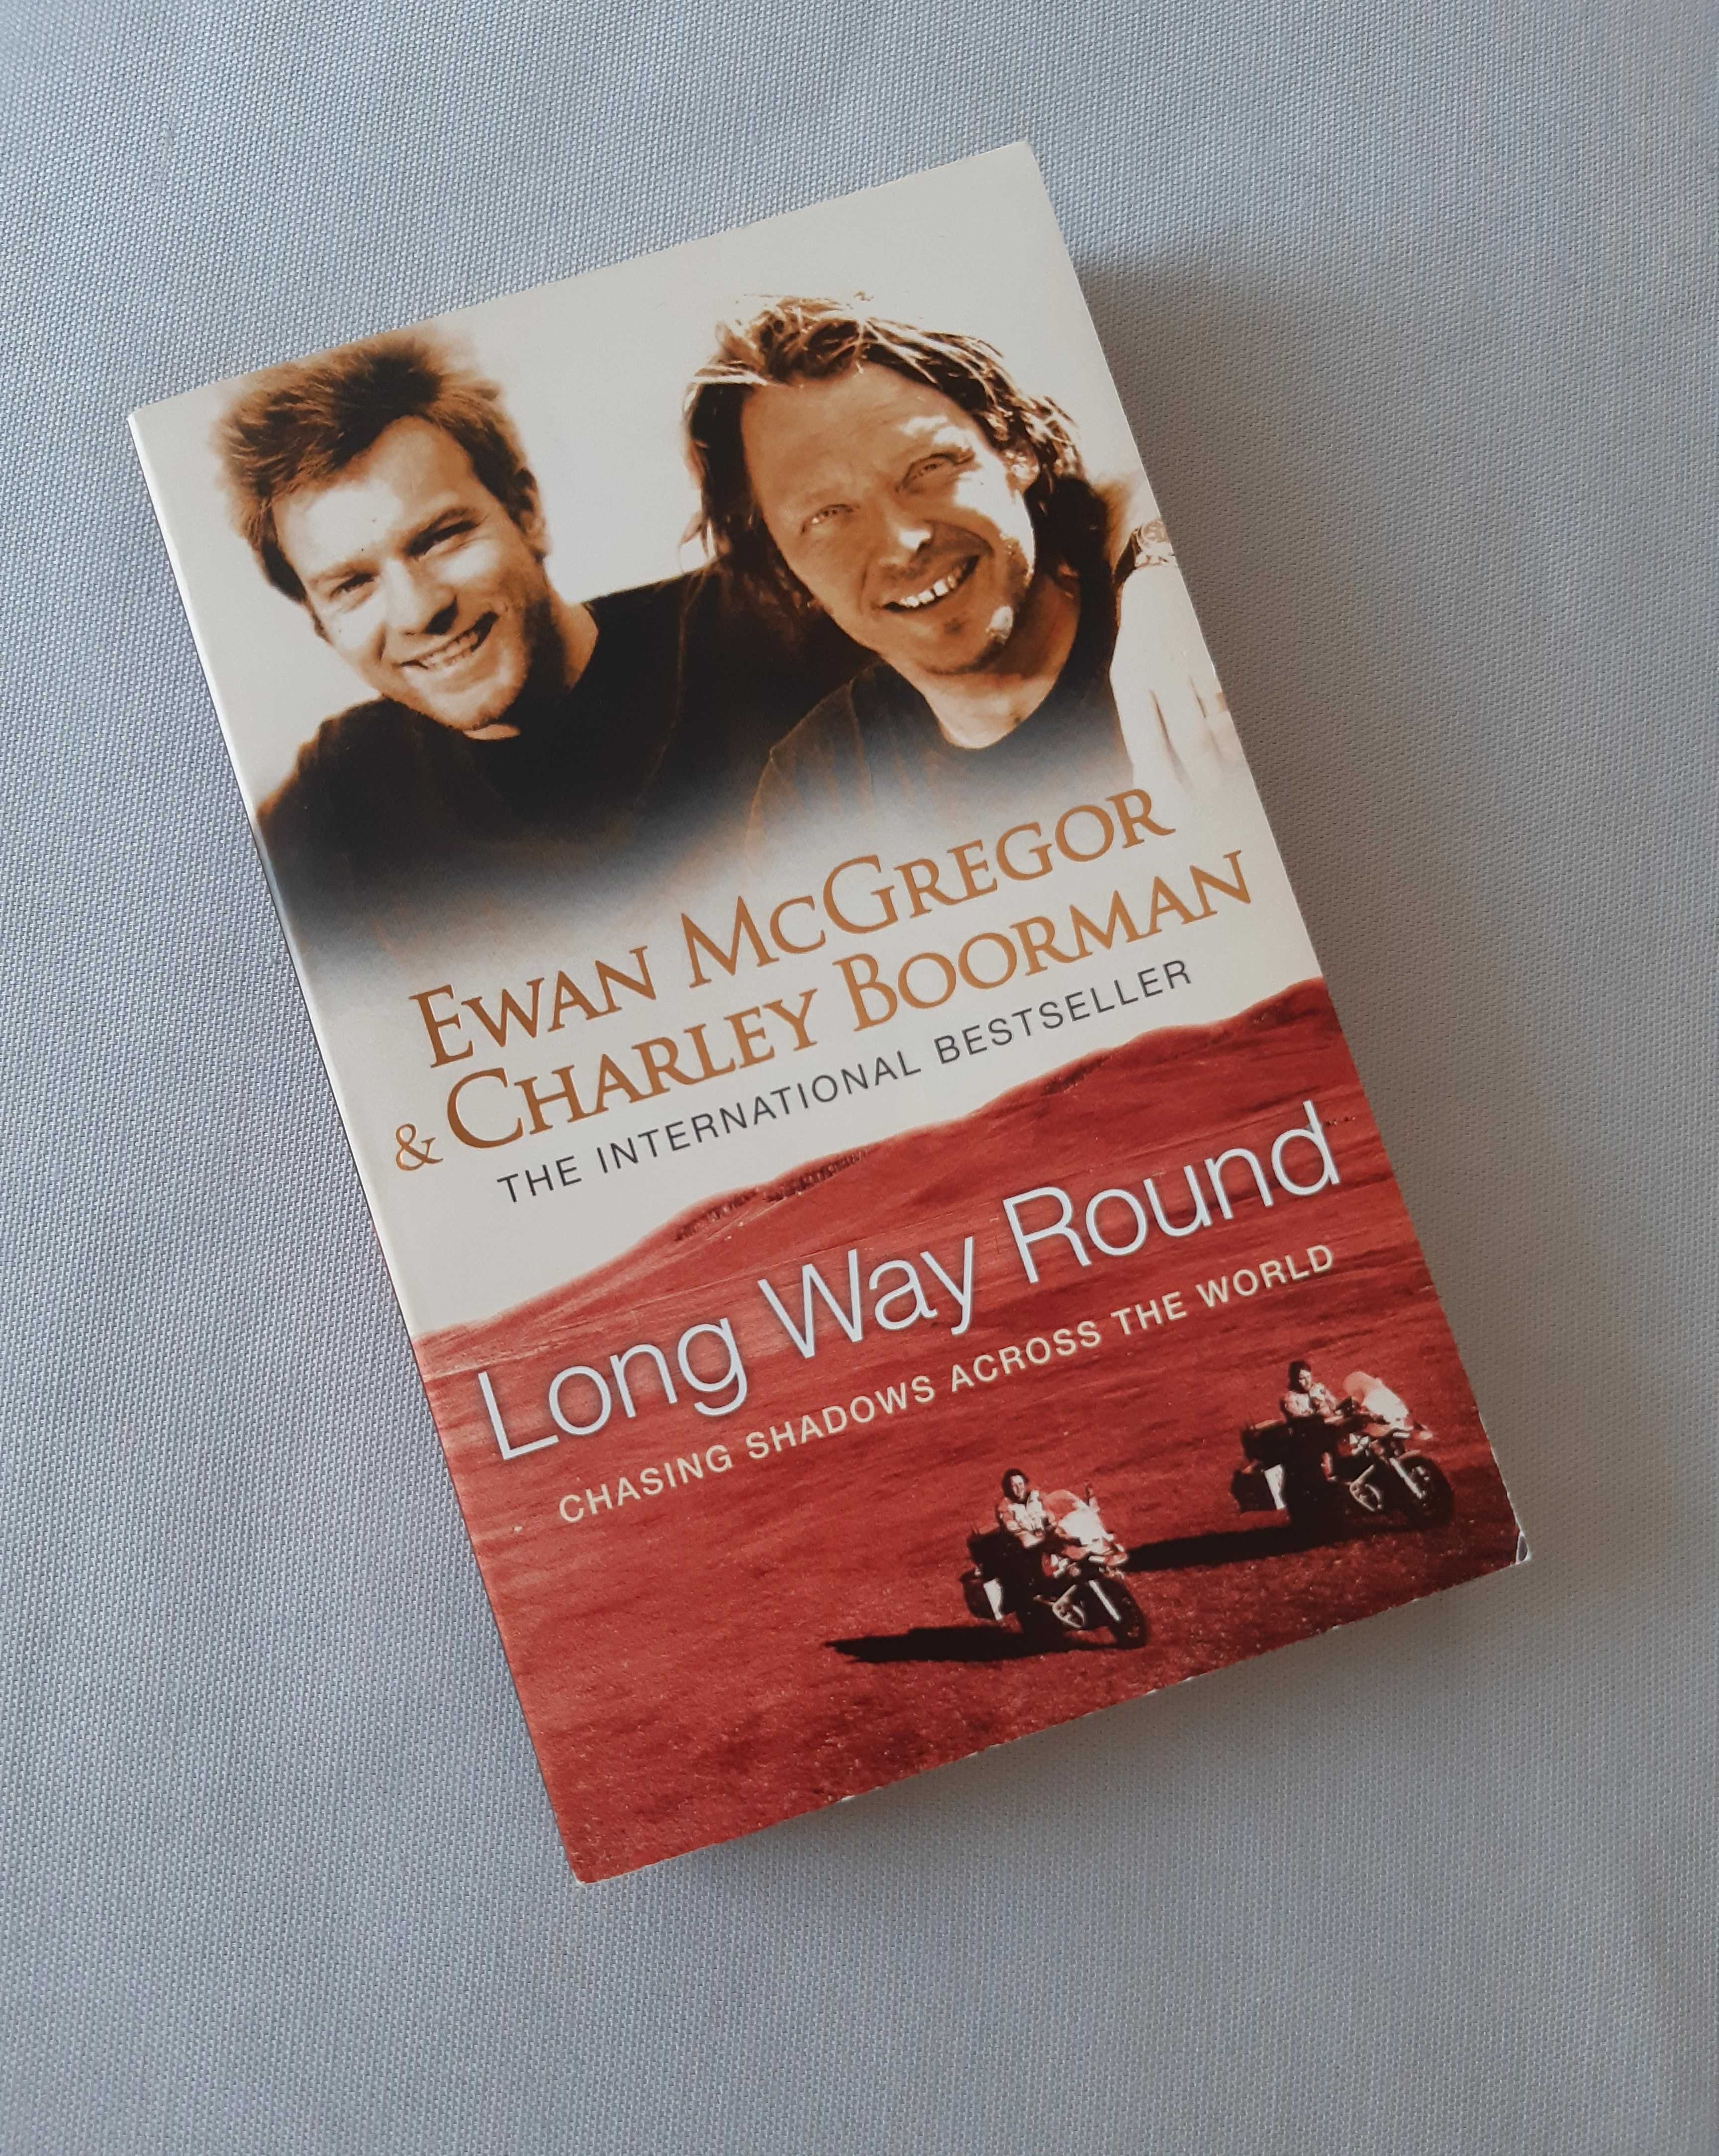 Long Way Round Ewan McGregor Charley Boorman